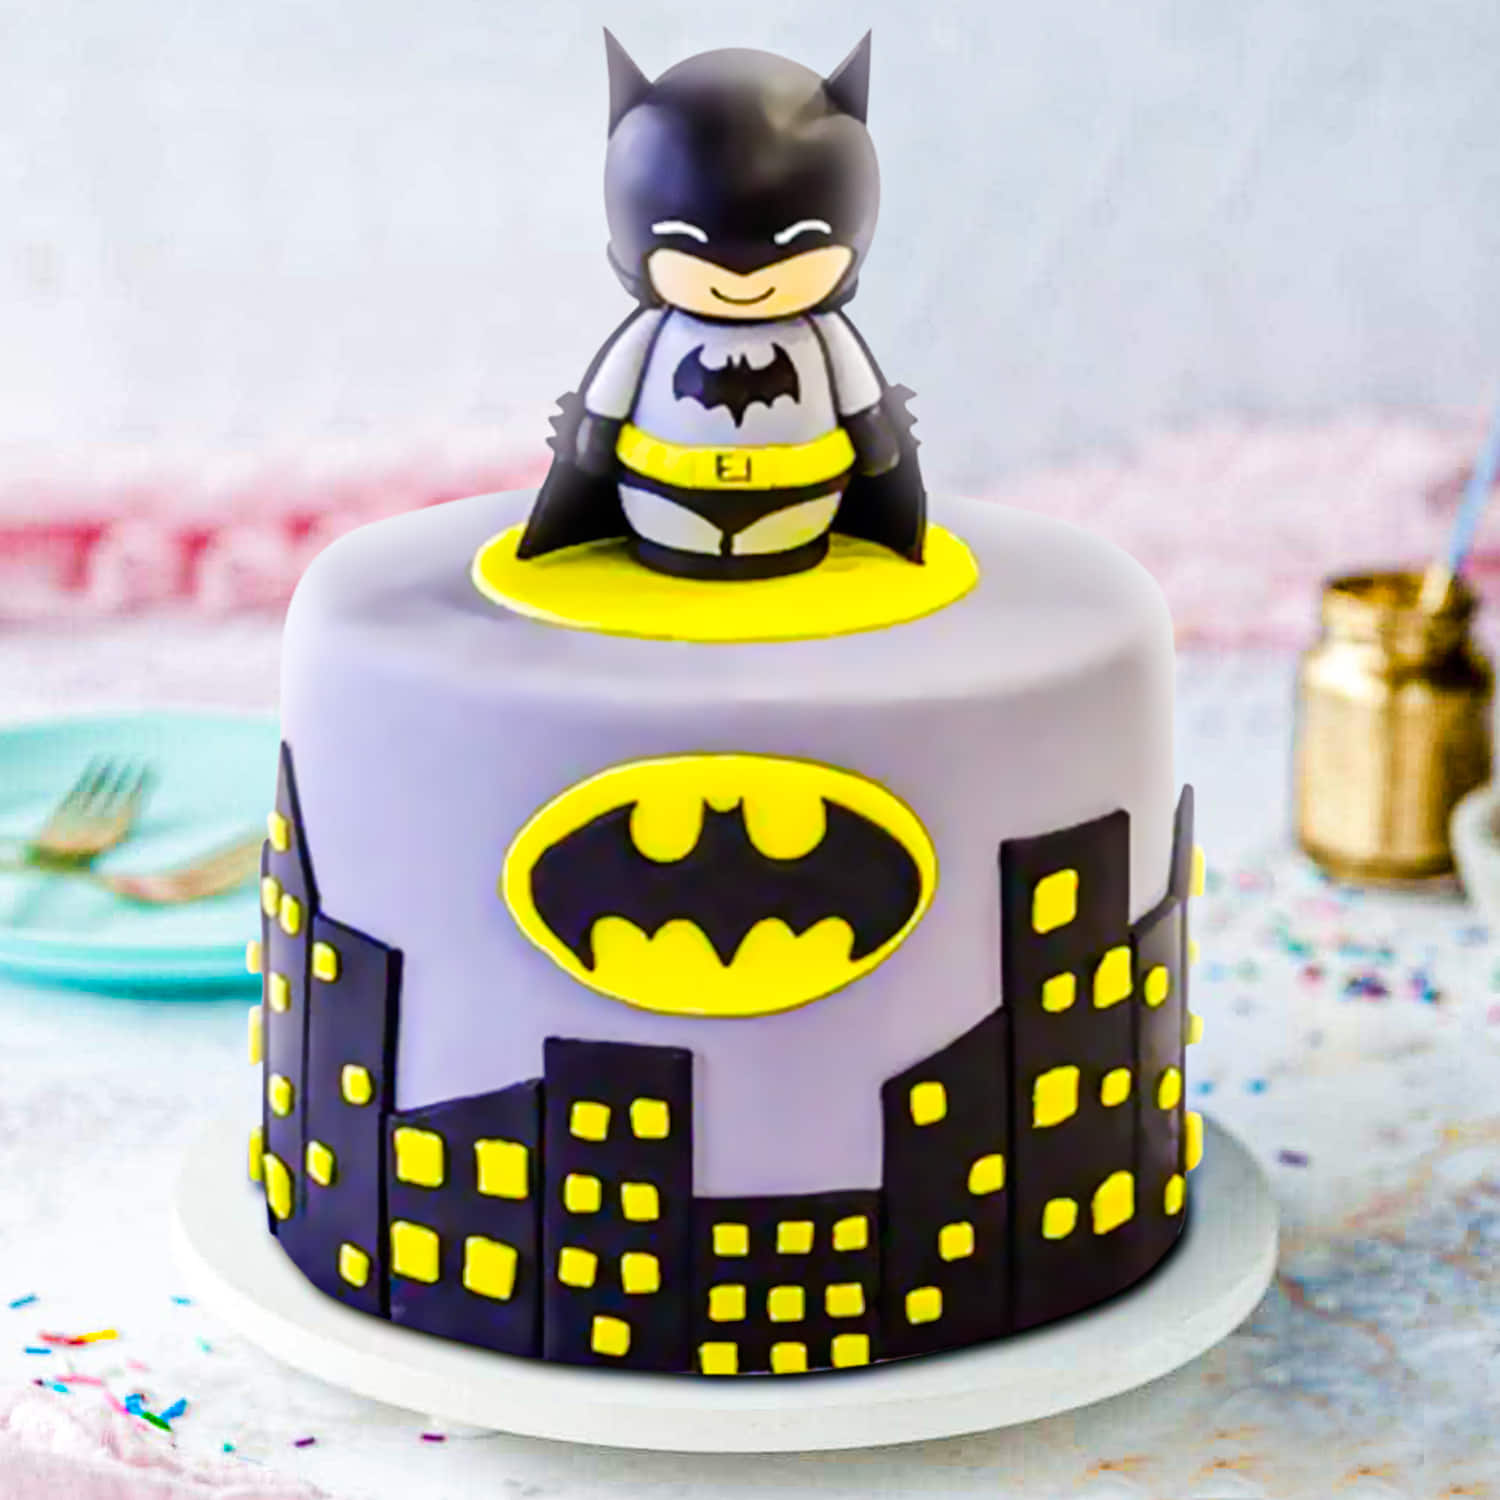 Batman Cake & City . Cake Topper Included - Zucchero's